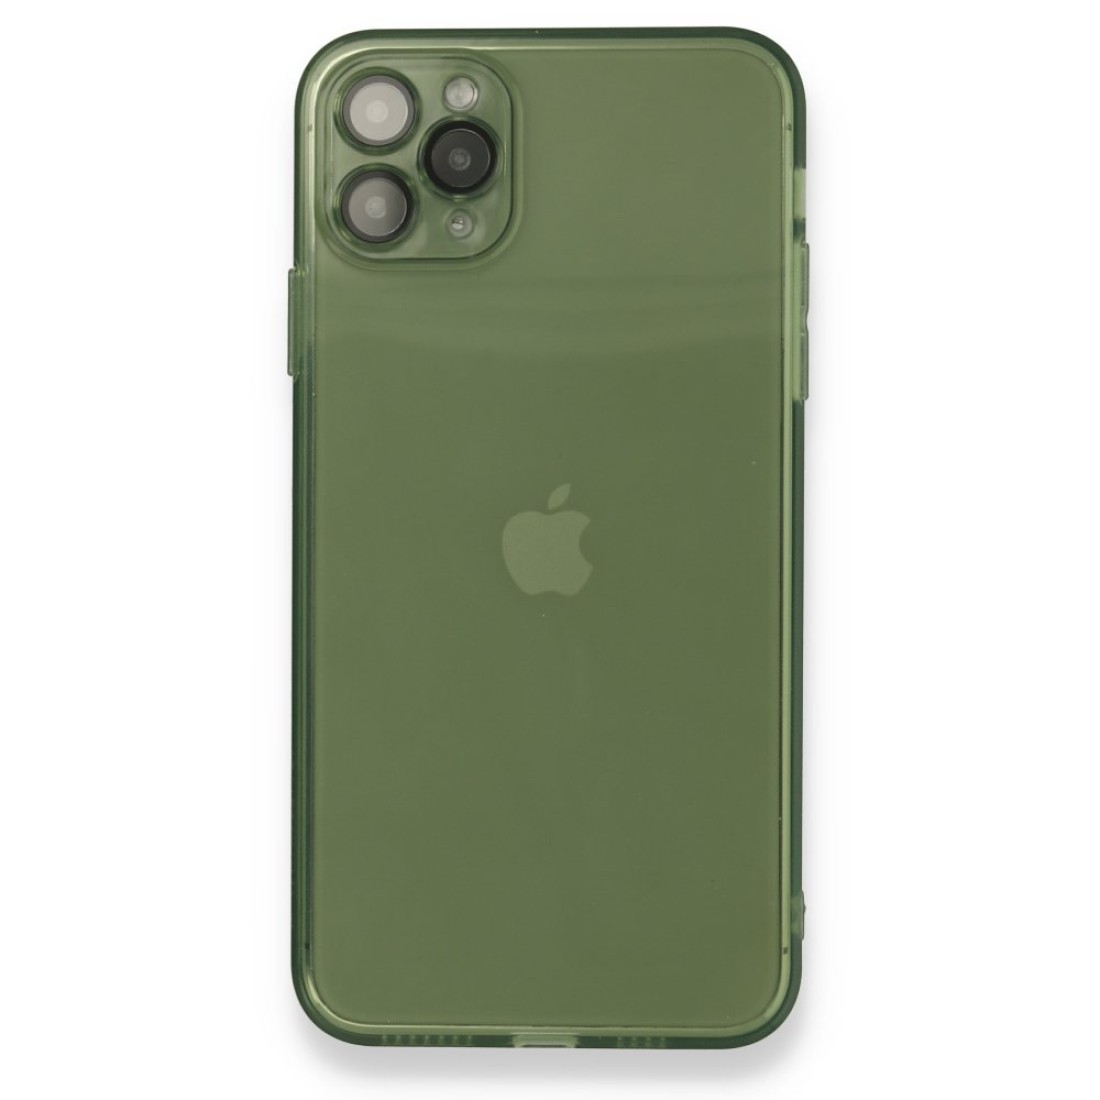 Apple iPhone 11 Pro Max Kılıf Fly Lens Silikon - Yeşil